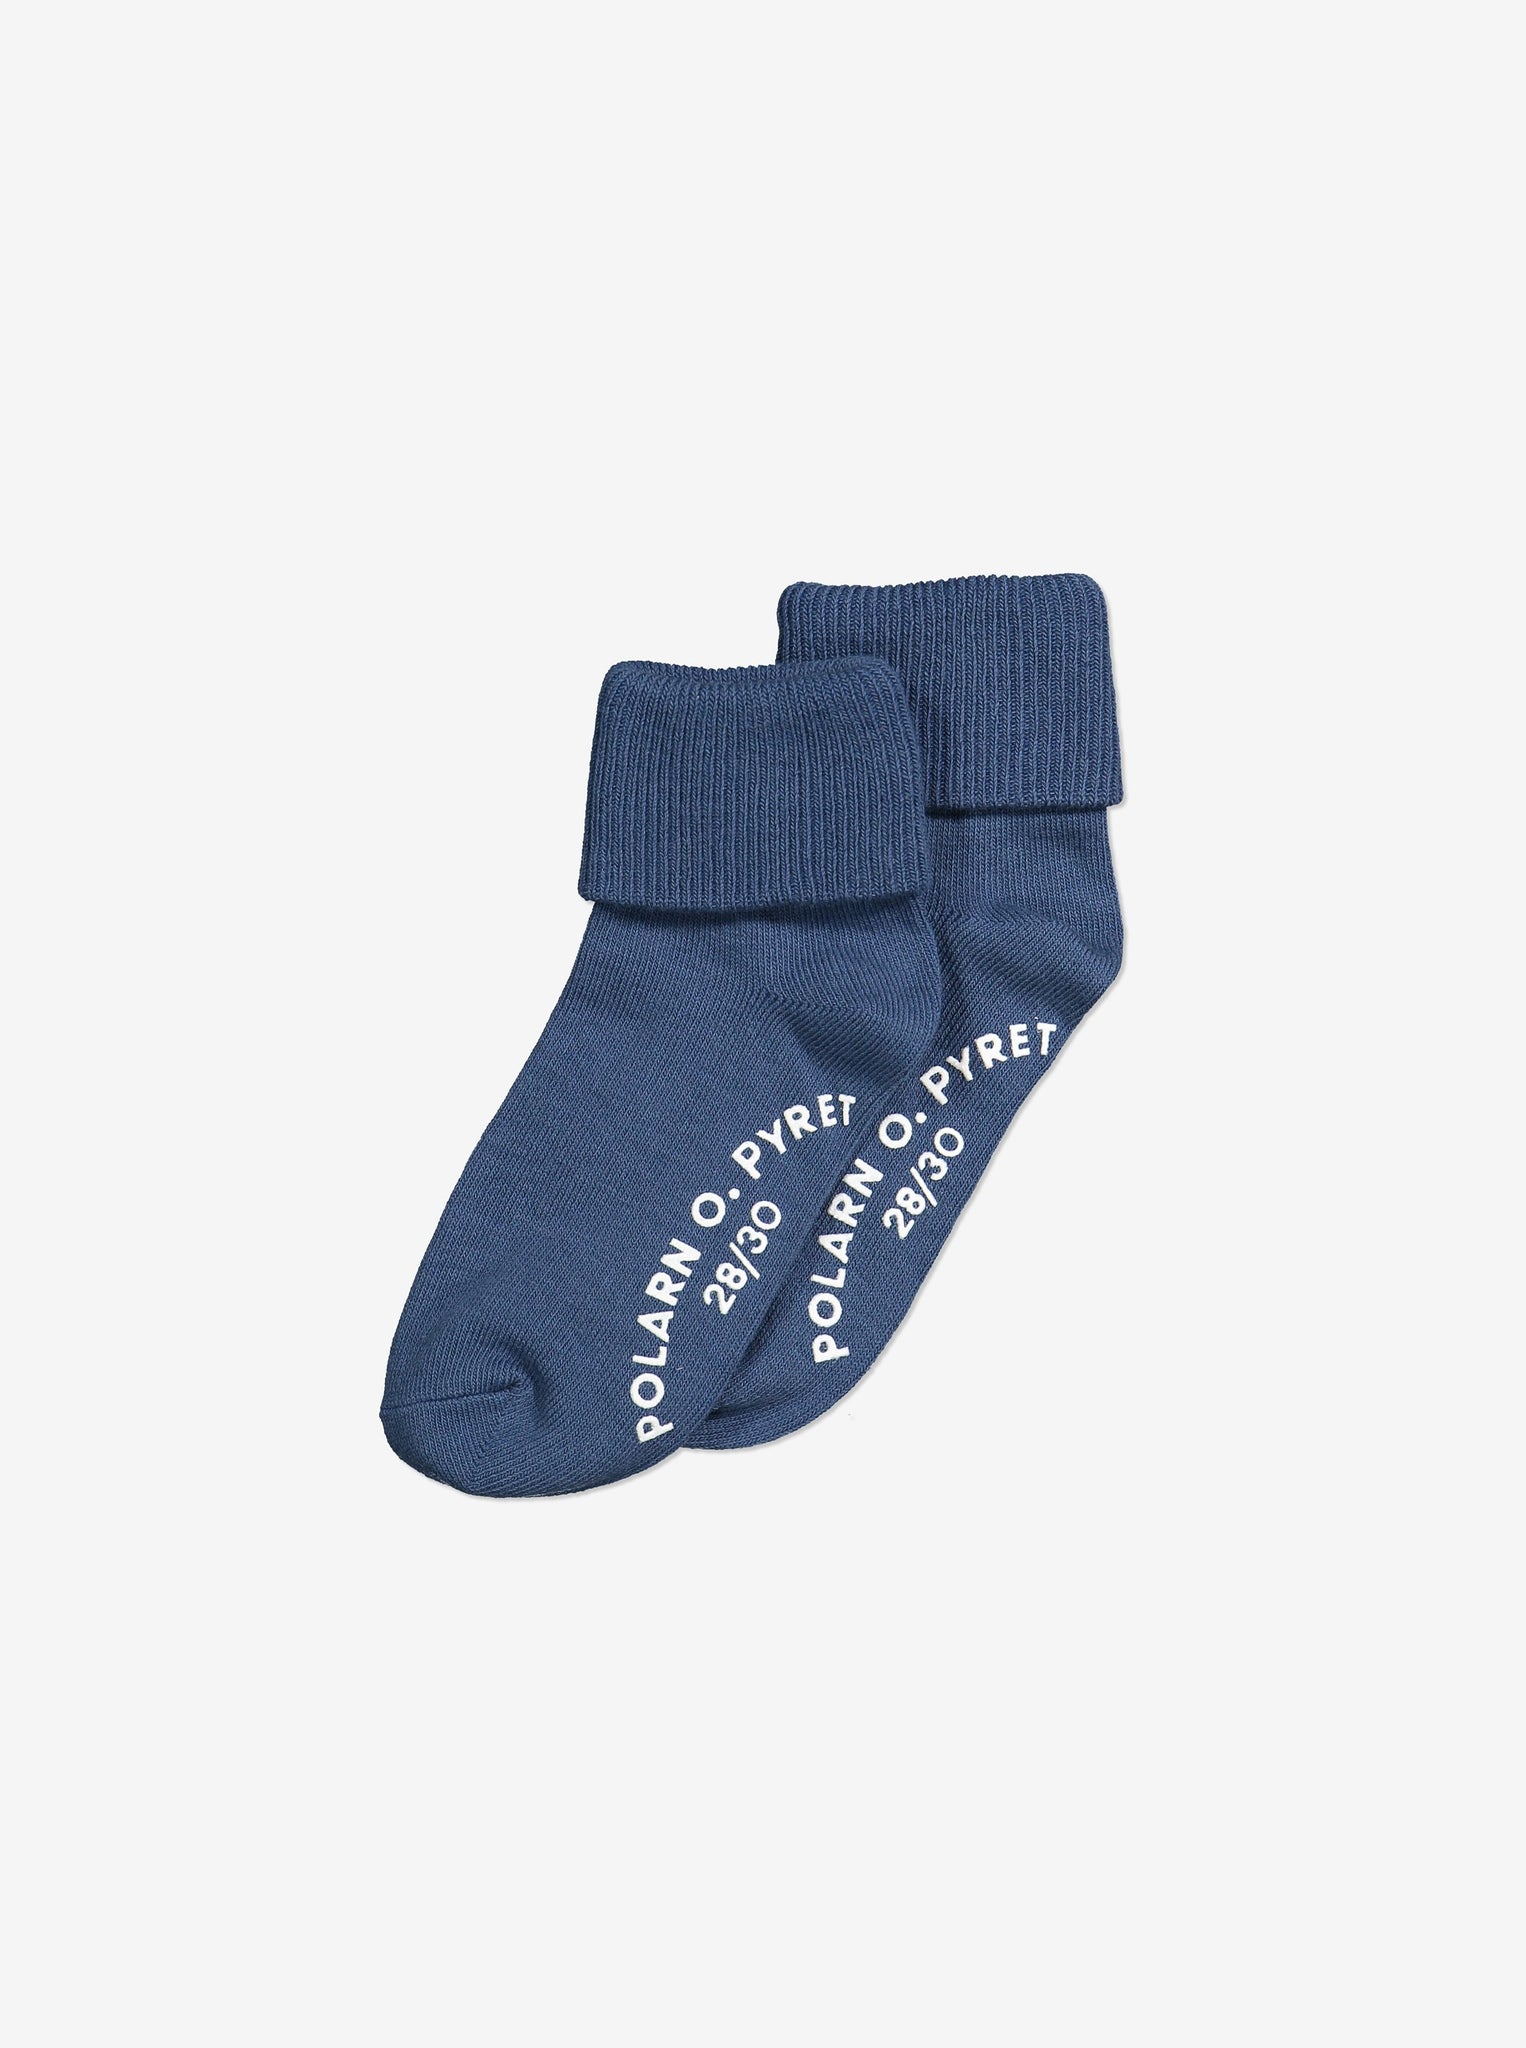 Two Pack Antislip Kids Socks unisex, warm comfortable organic cotton, polarn o. pyret quality